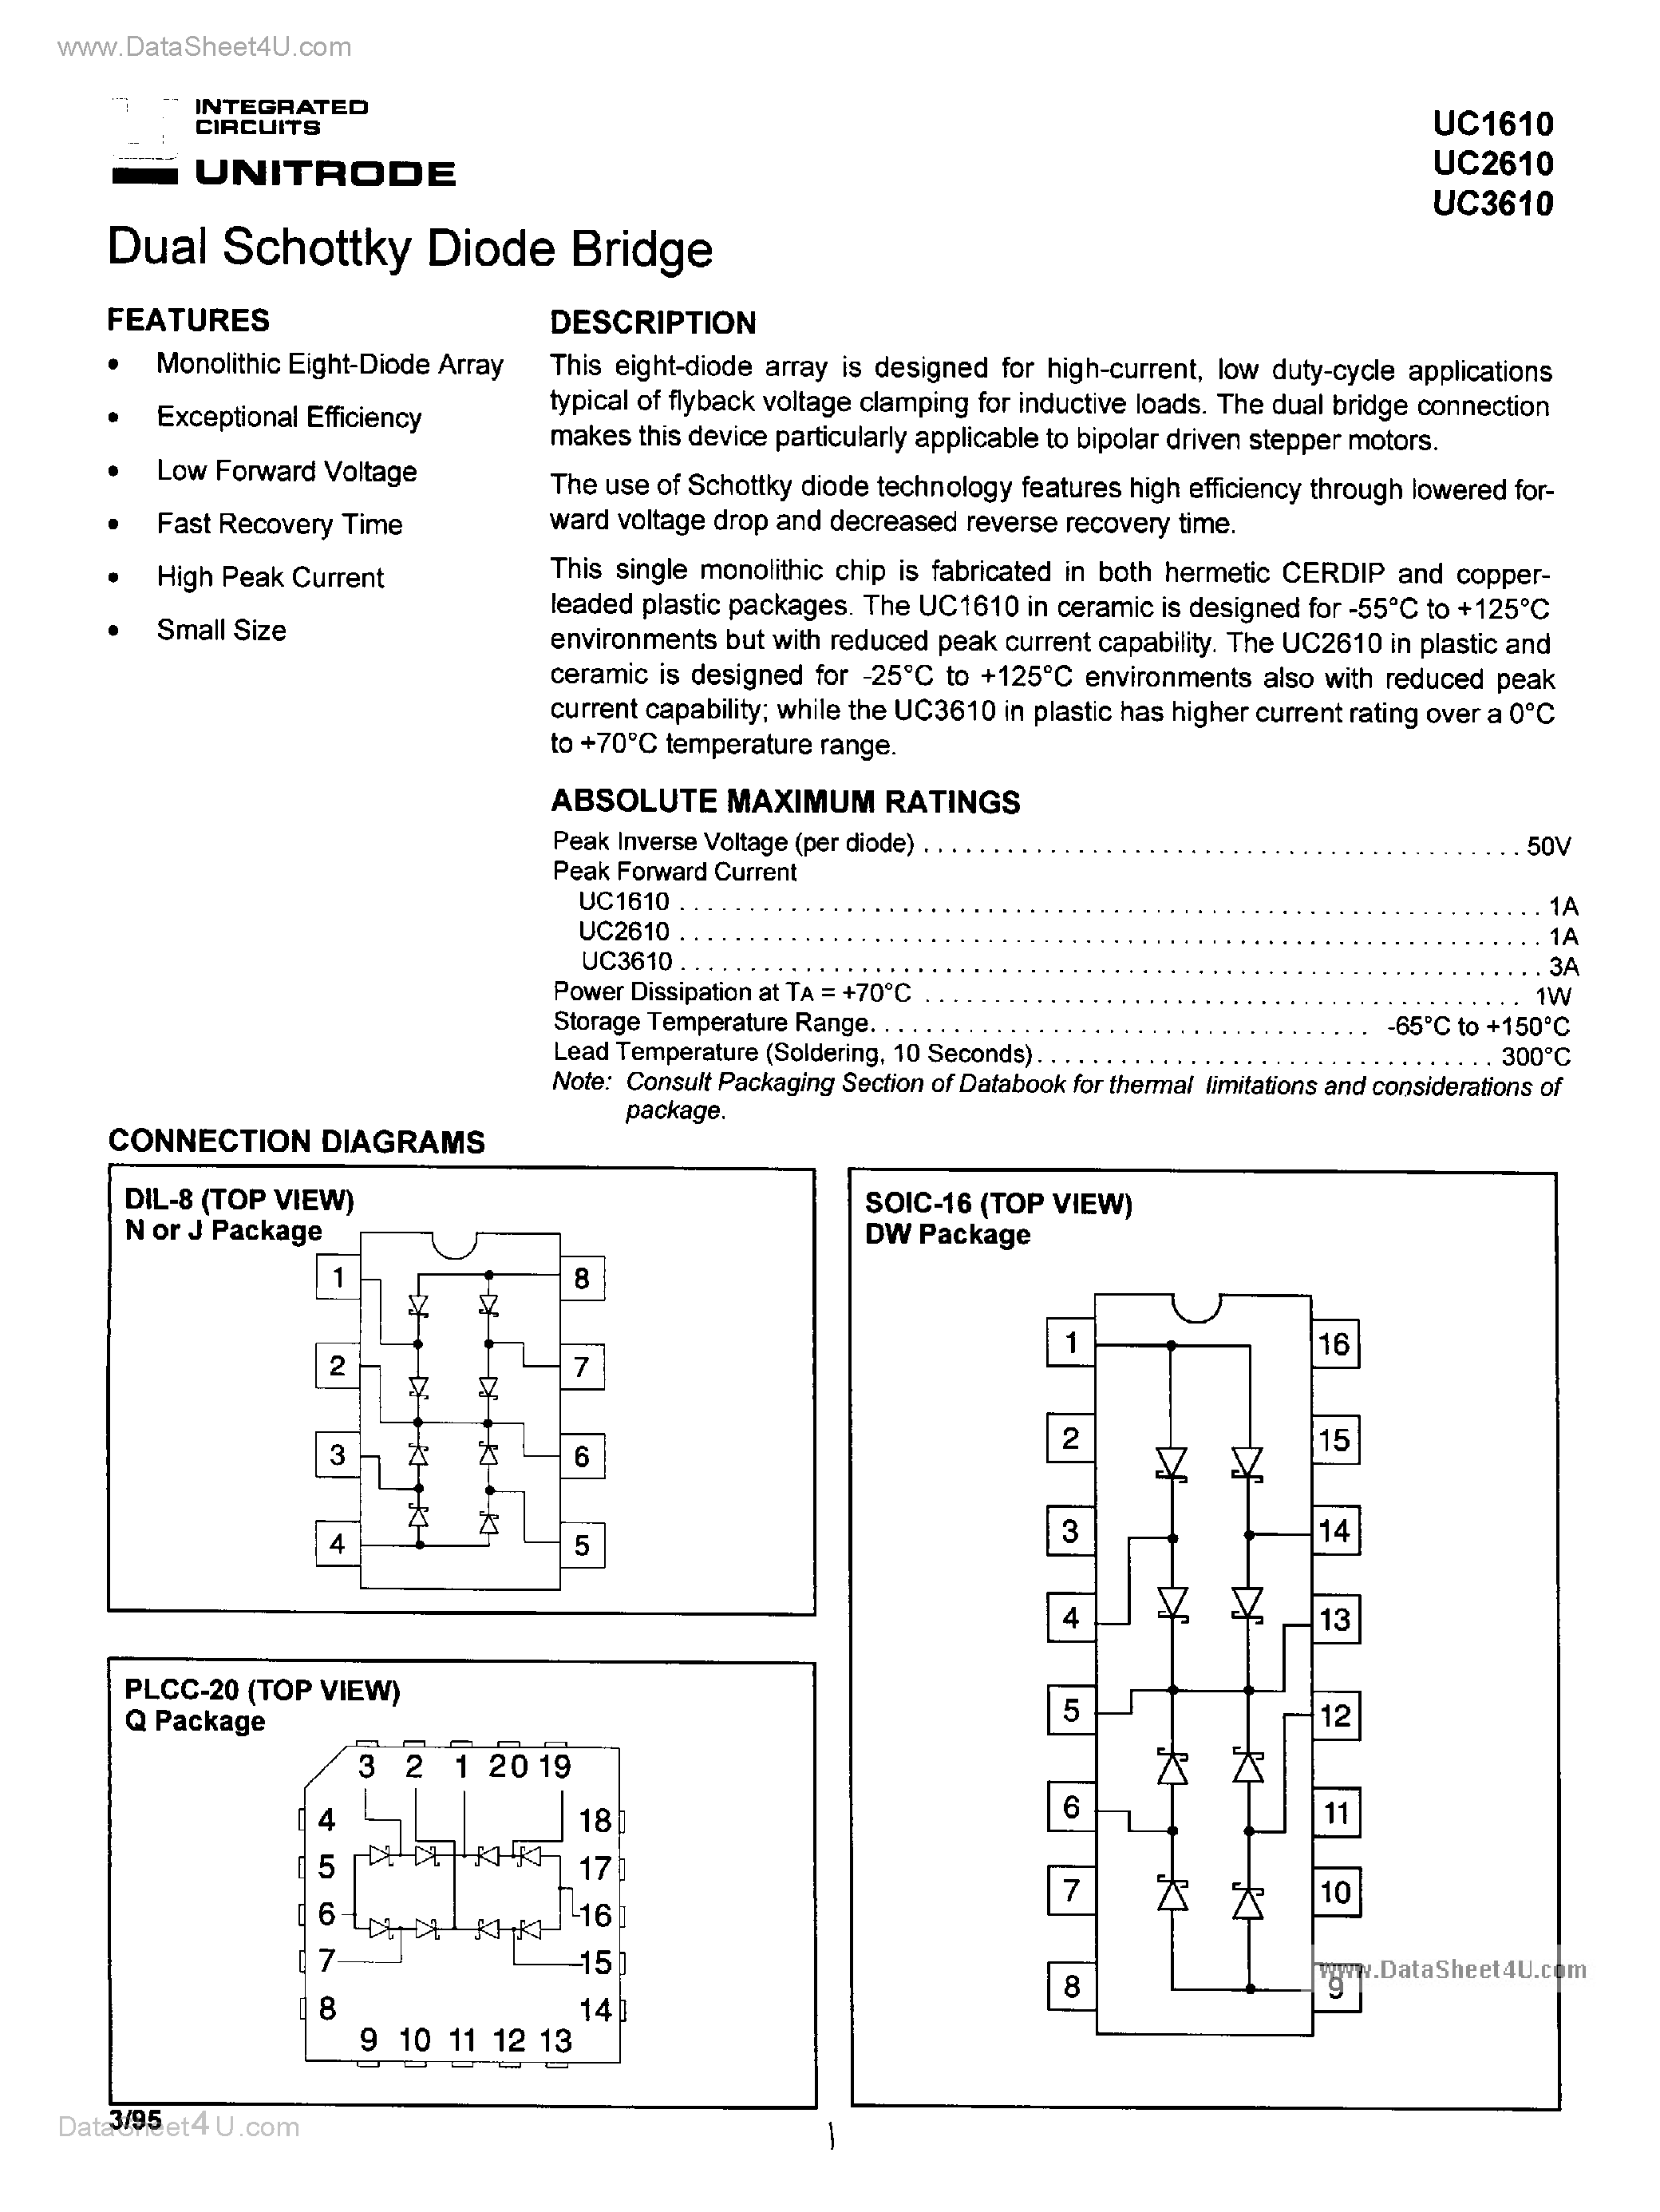 Datasheet UC1610 - Dual Schottky Diode Bridge page 1